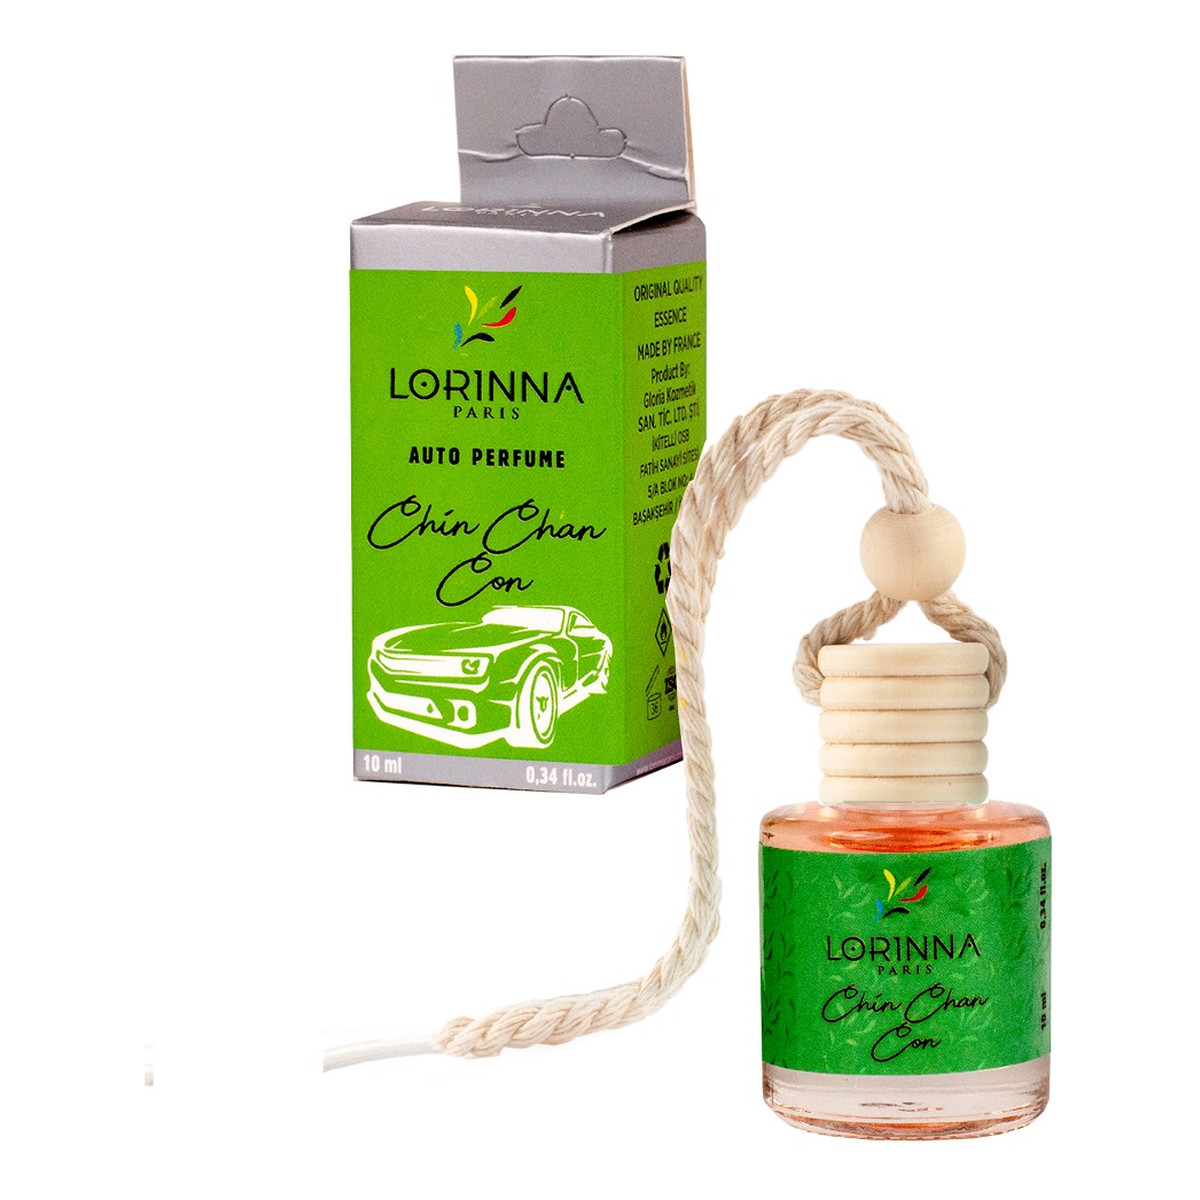 Lorinna Auto perfume zapach do samochodu chin chan con 10ml